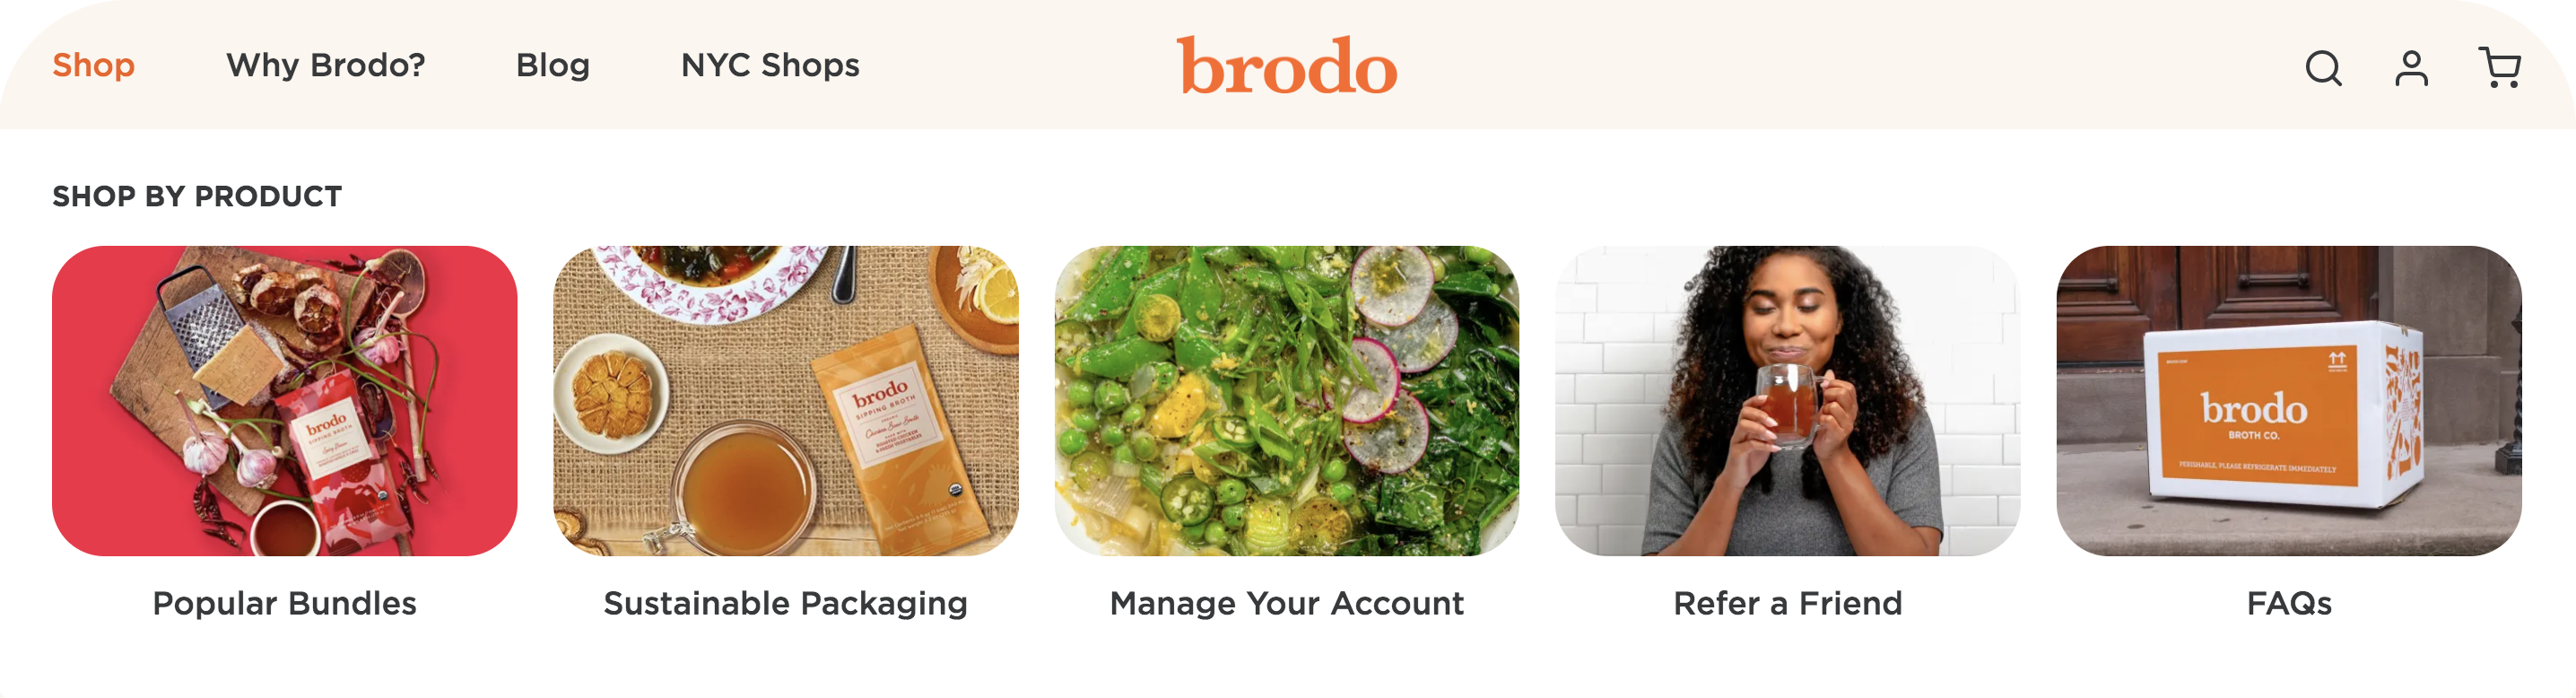 dropdown mega menu on Brodo's website